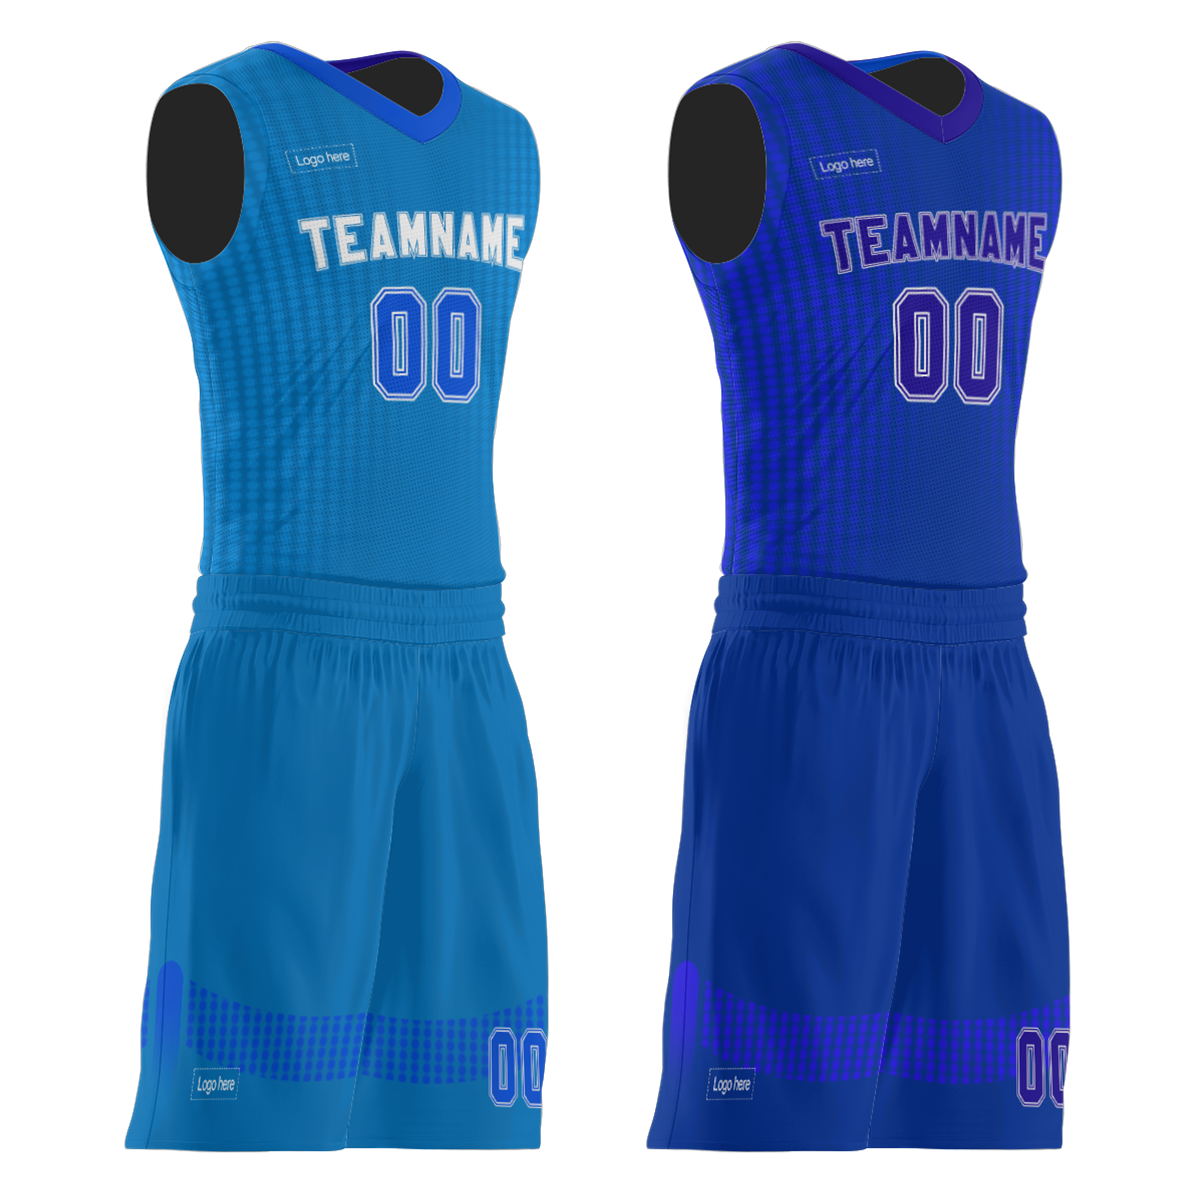 OEM Custom Cheap Retro Practice Basketball Jerseys Sublimation Basketball Wear Breathable Quick Dry Basketball Shirts Uniforms